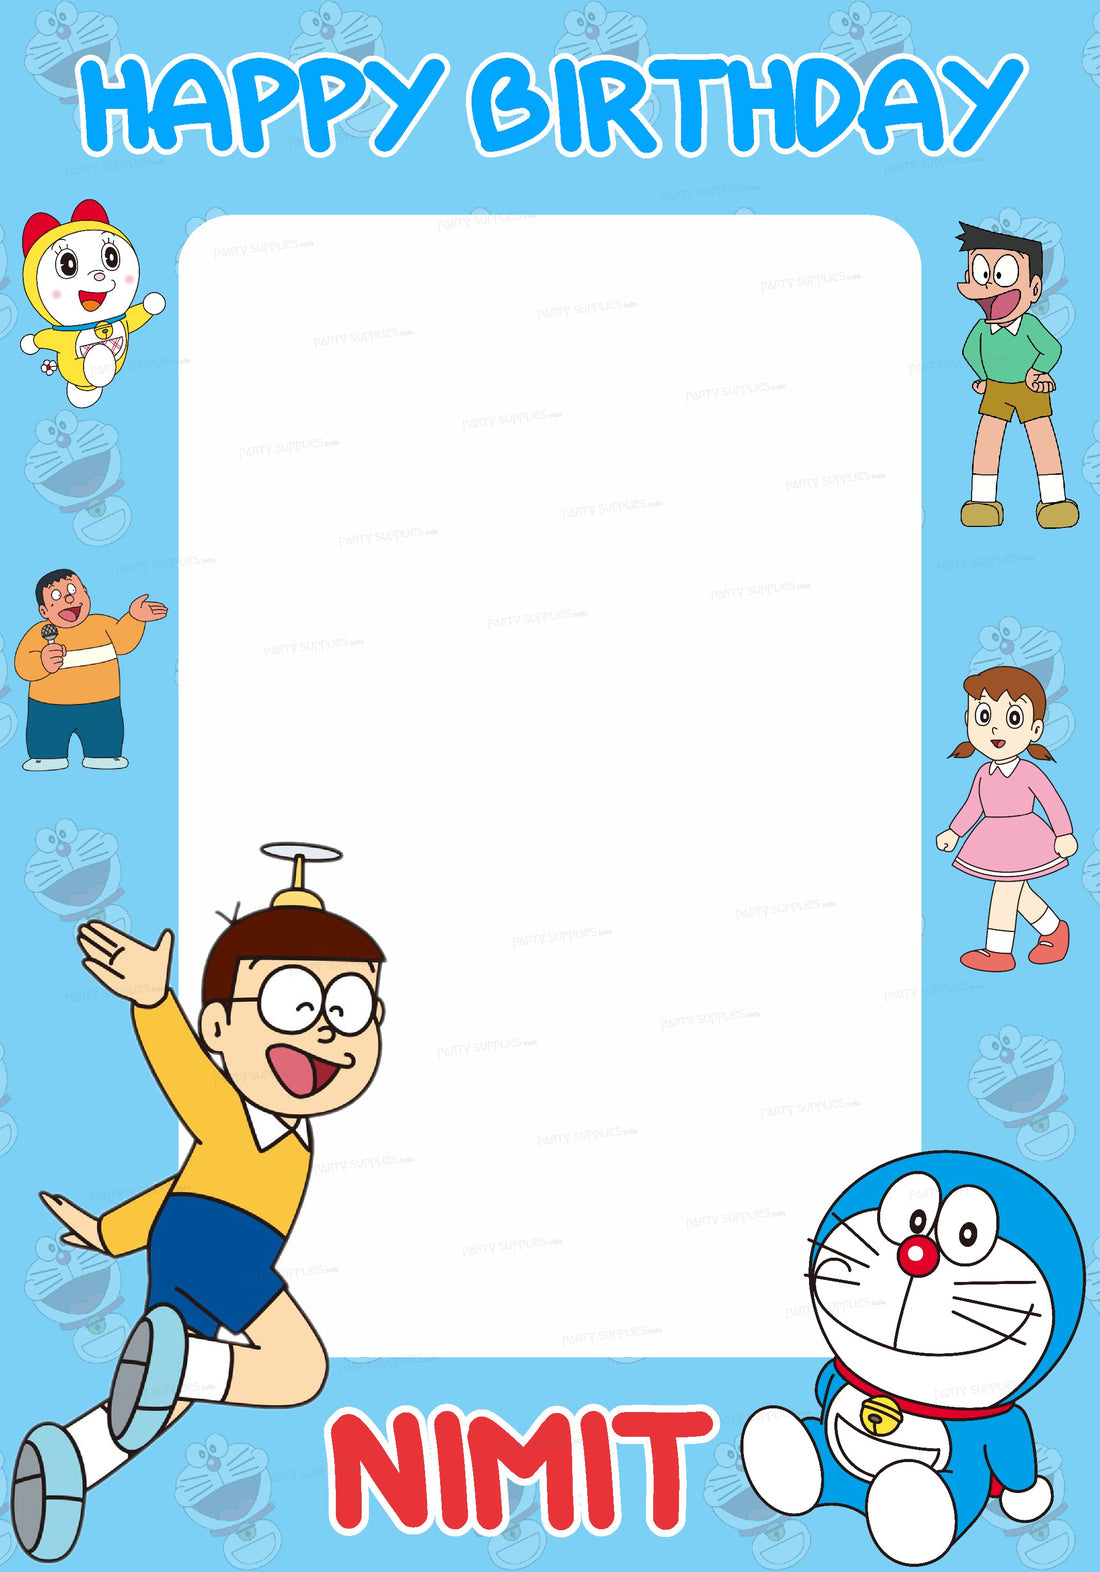 PSI Doraemon Theme Customized PhotoBooth